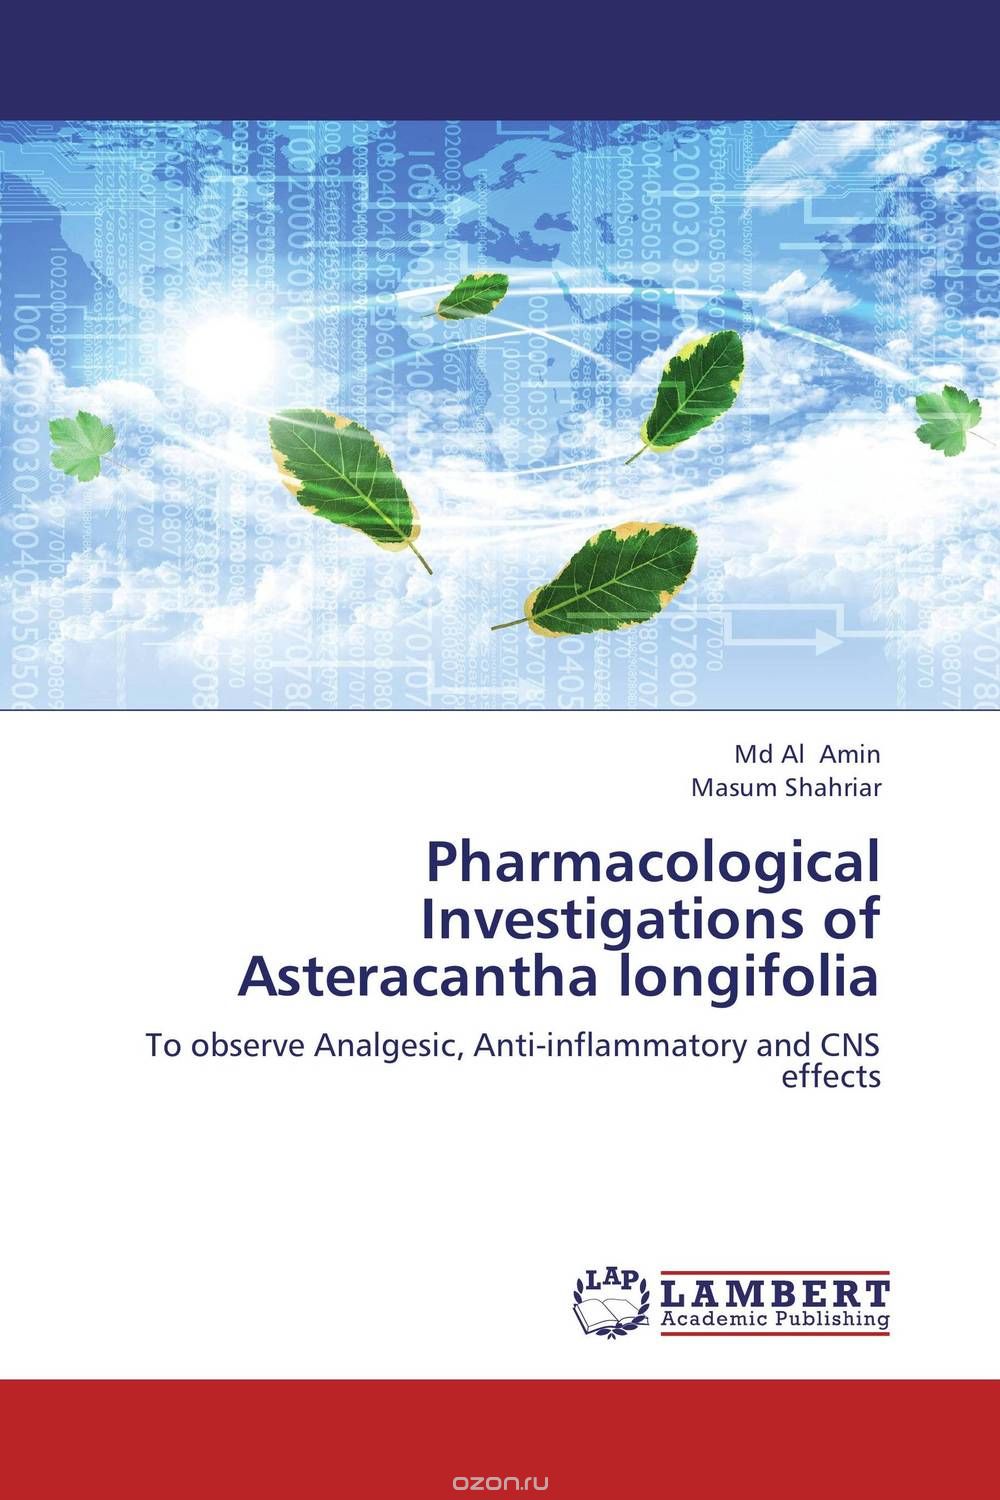 Скачать книгу "Pharmacological Investigations of Asteracantha longifolia"